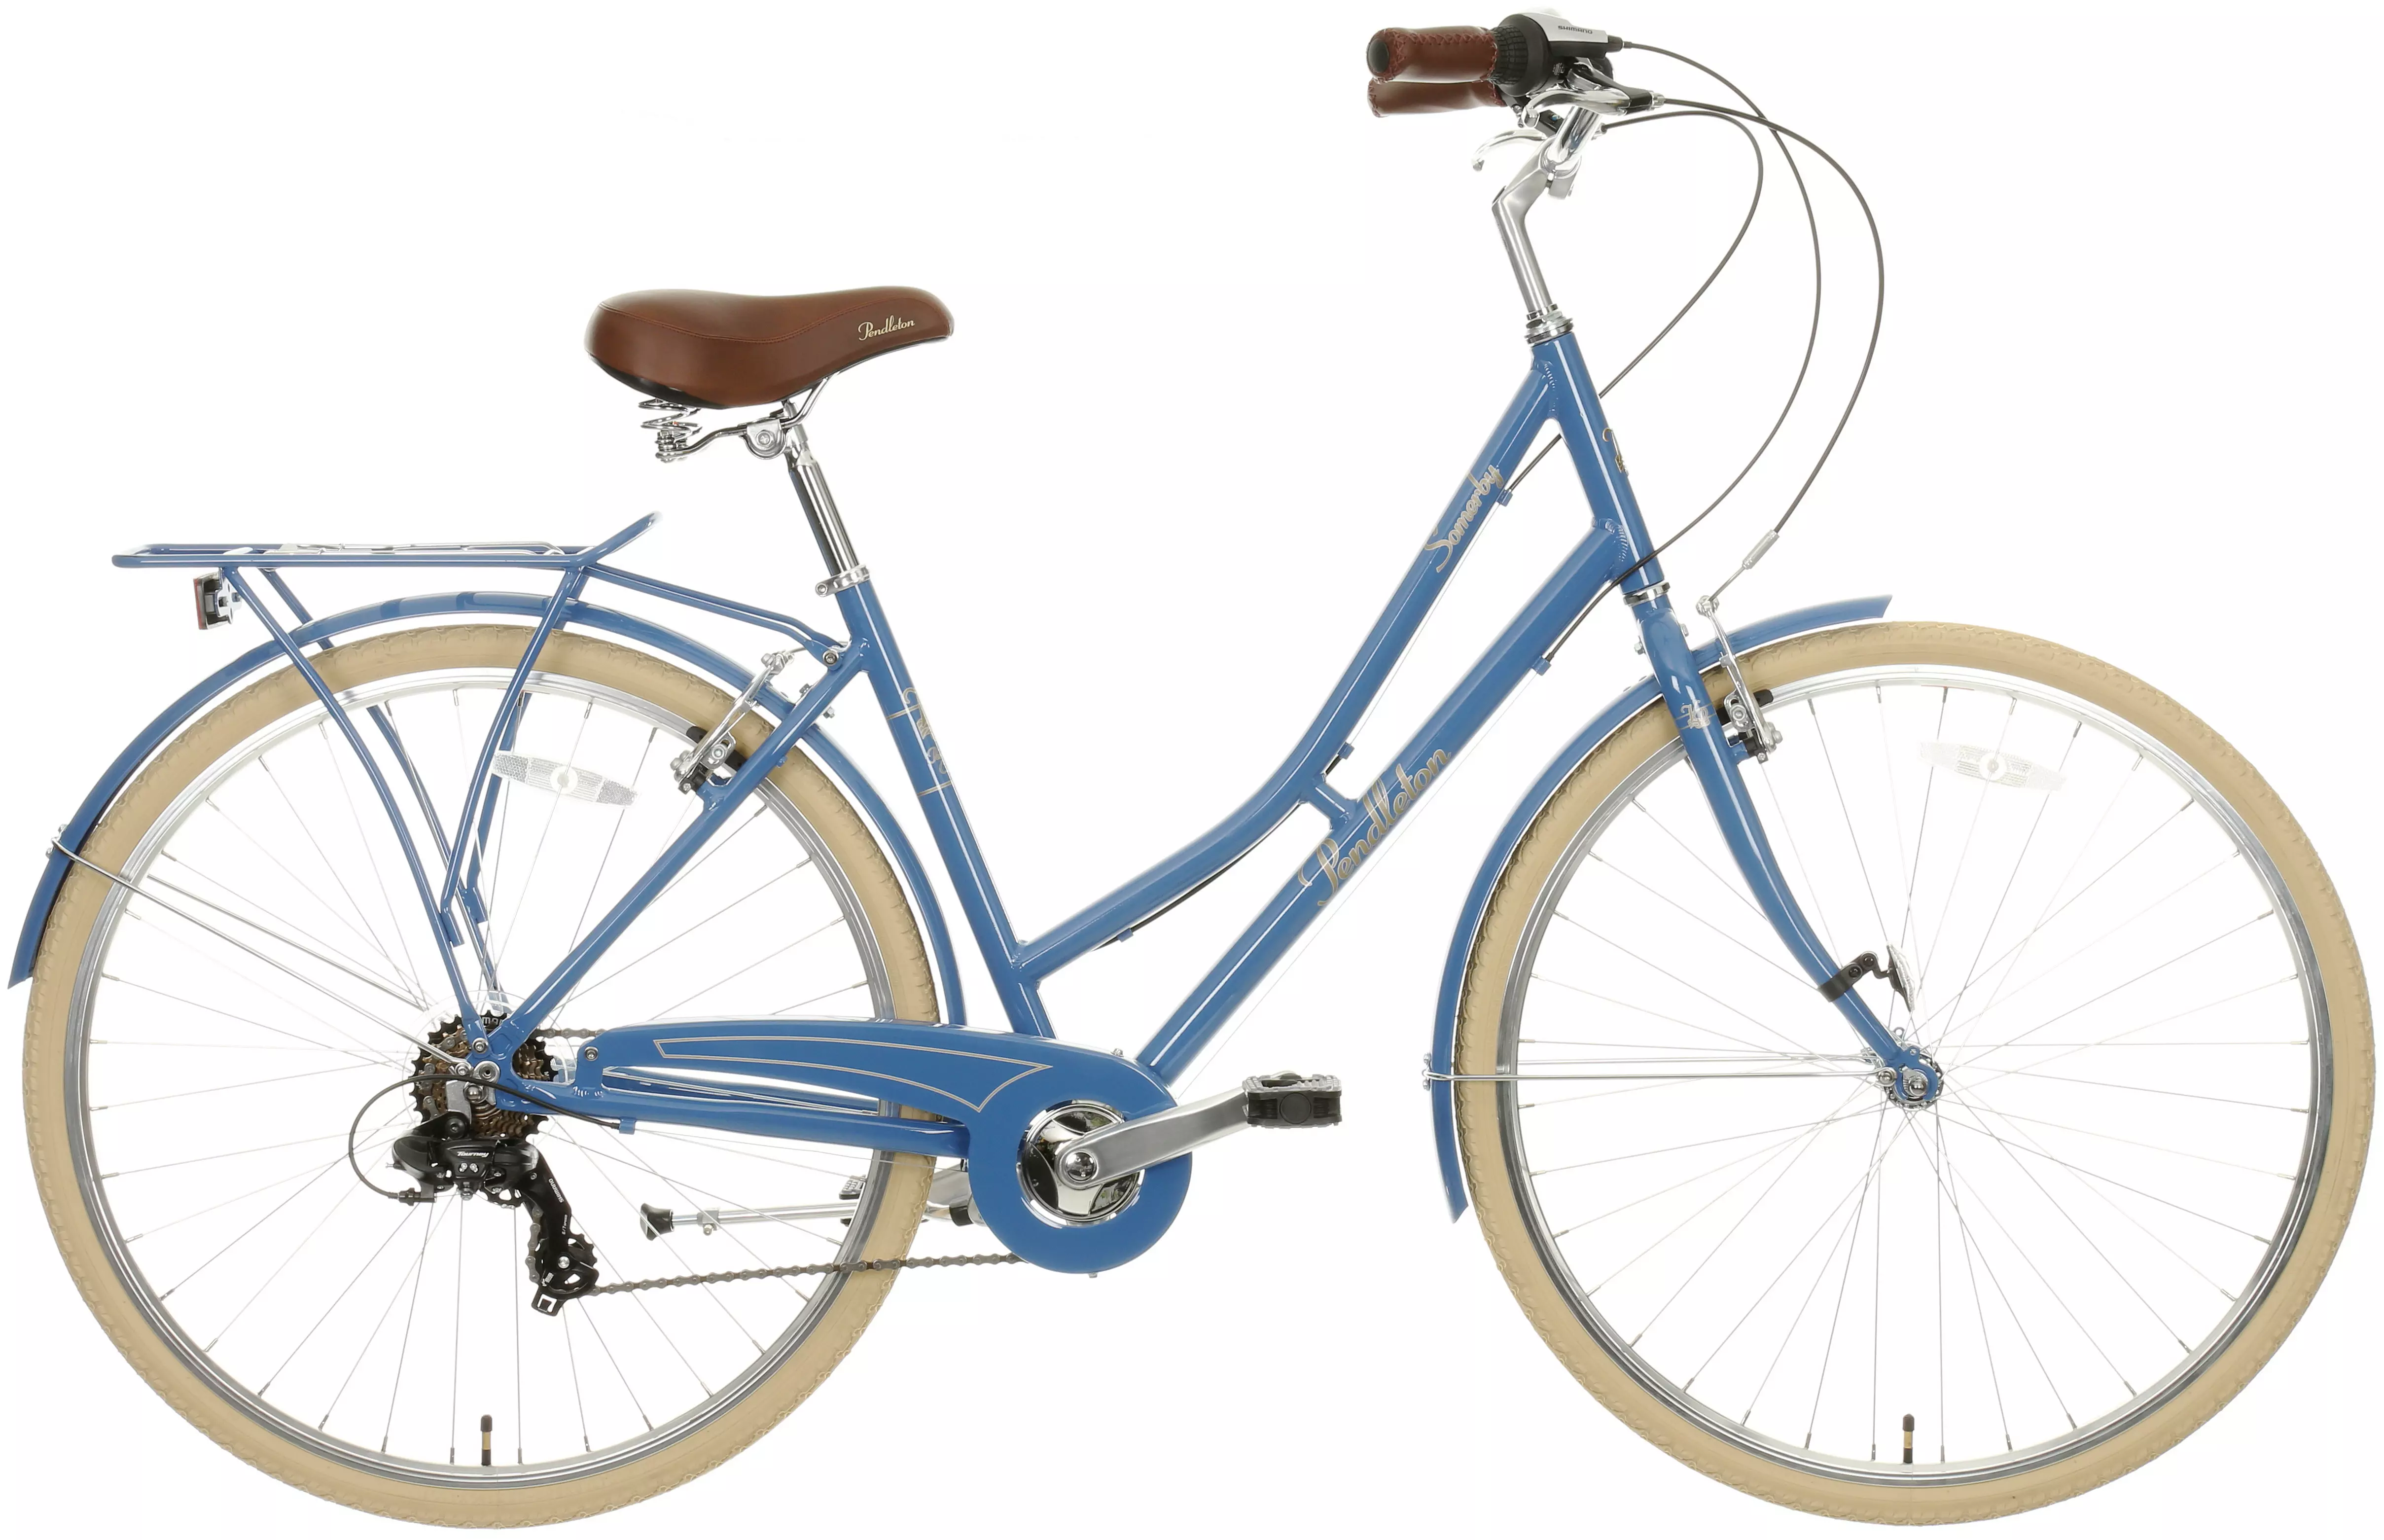 blue pendleton bike